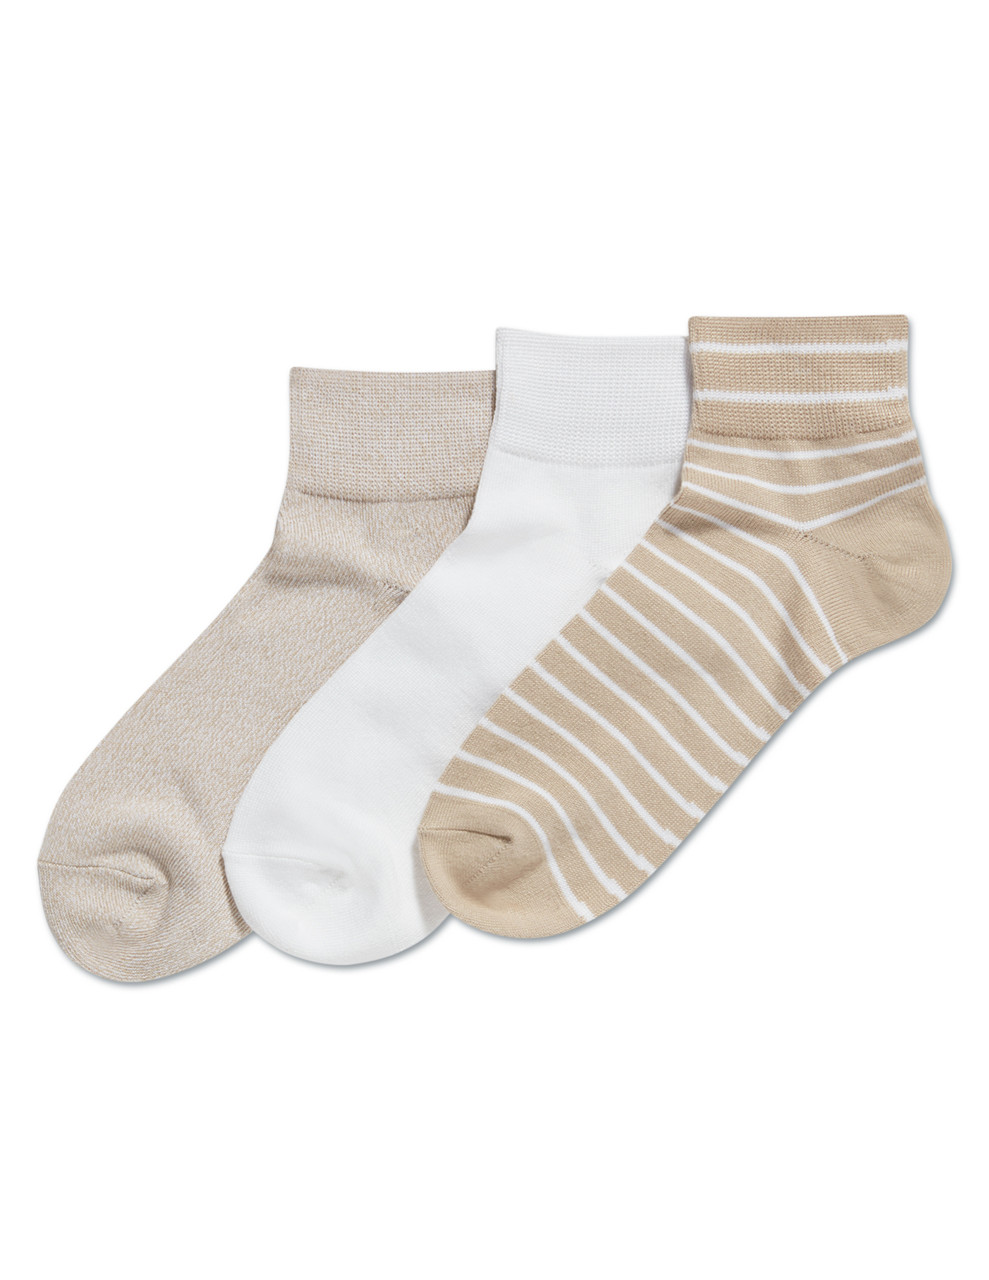 No Nonsense Women's Cushioned No Show Socks - Size 4-10, 3 Pairs